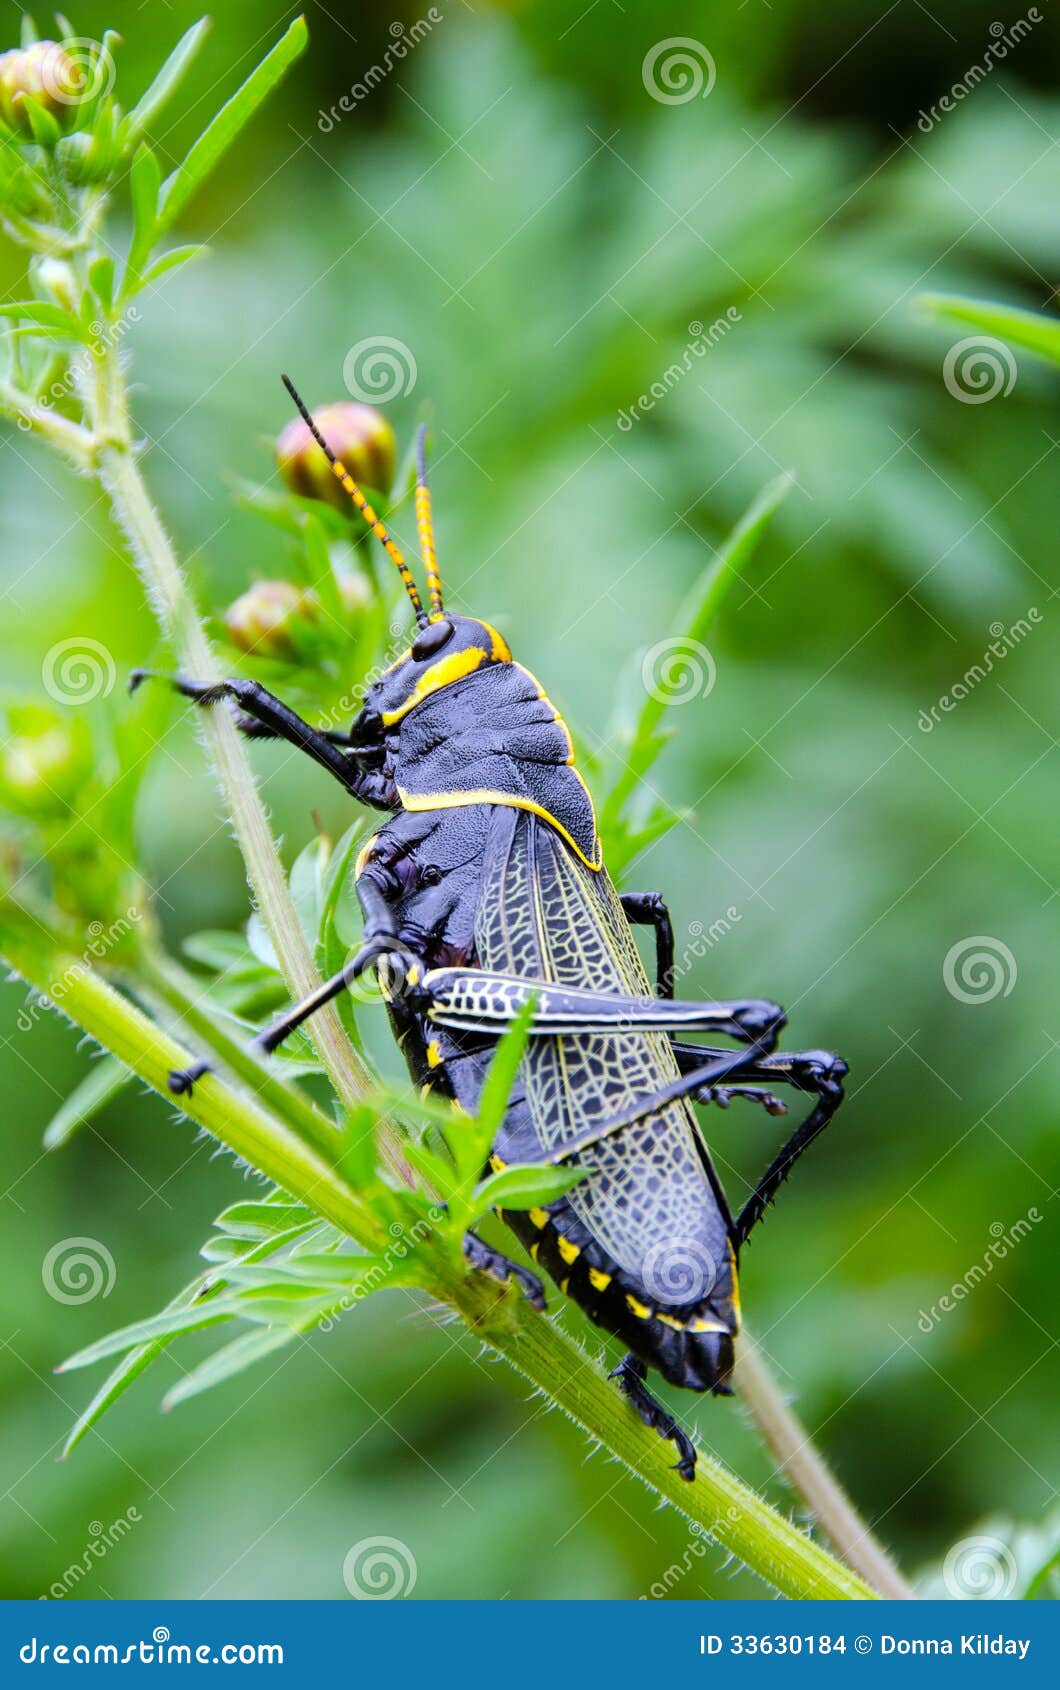 Black Grasshopper stock photo. Image of eating, romalea - 33630184